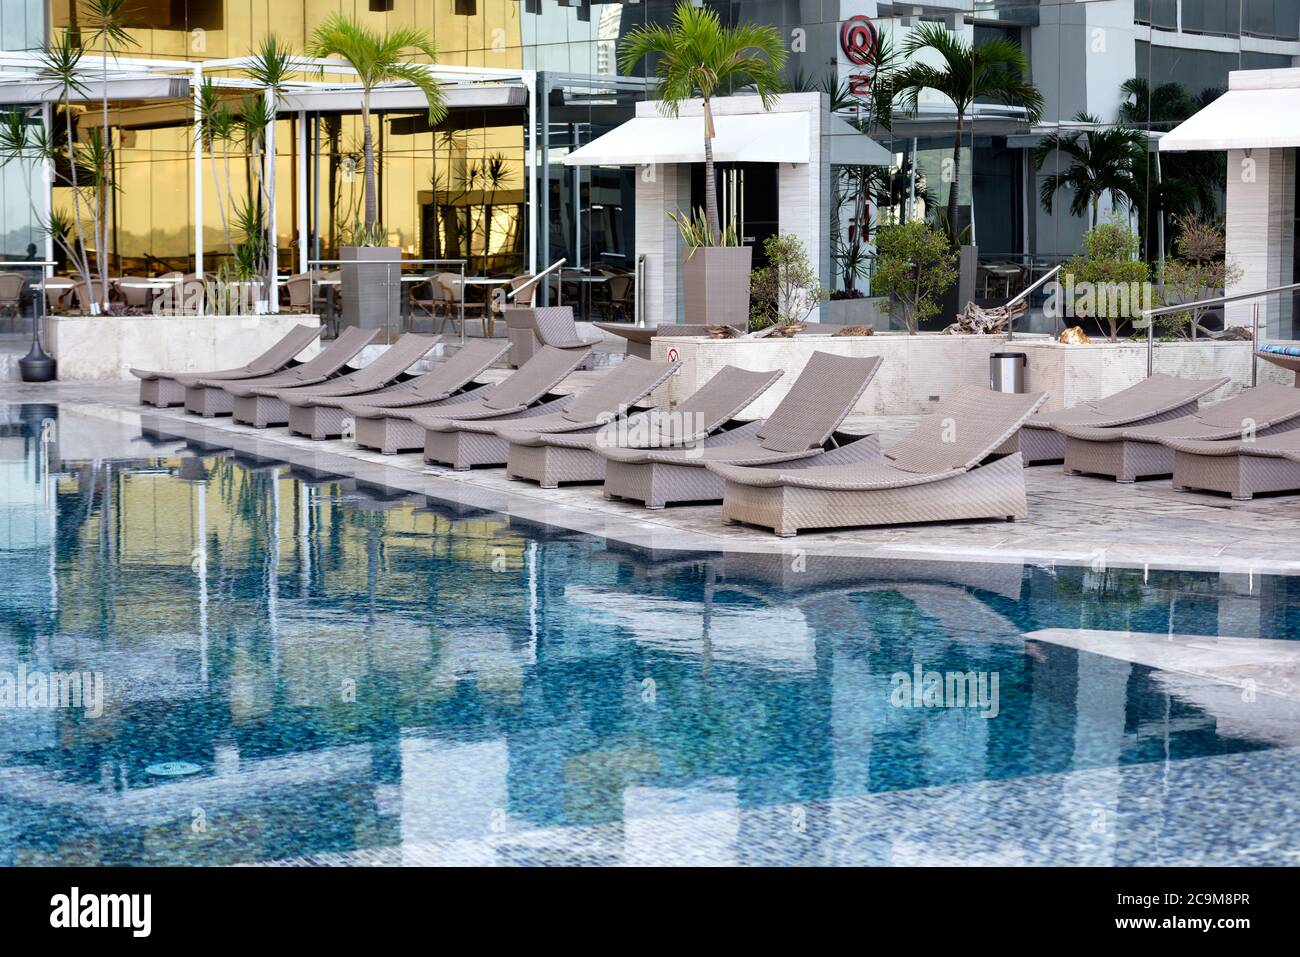 Sonnenliegen am Pool, Hilton Hotel, panama City, Panama, Mittelamerika Stockfoto